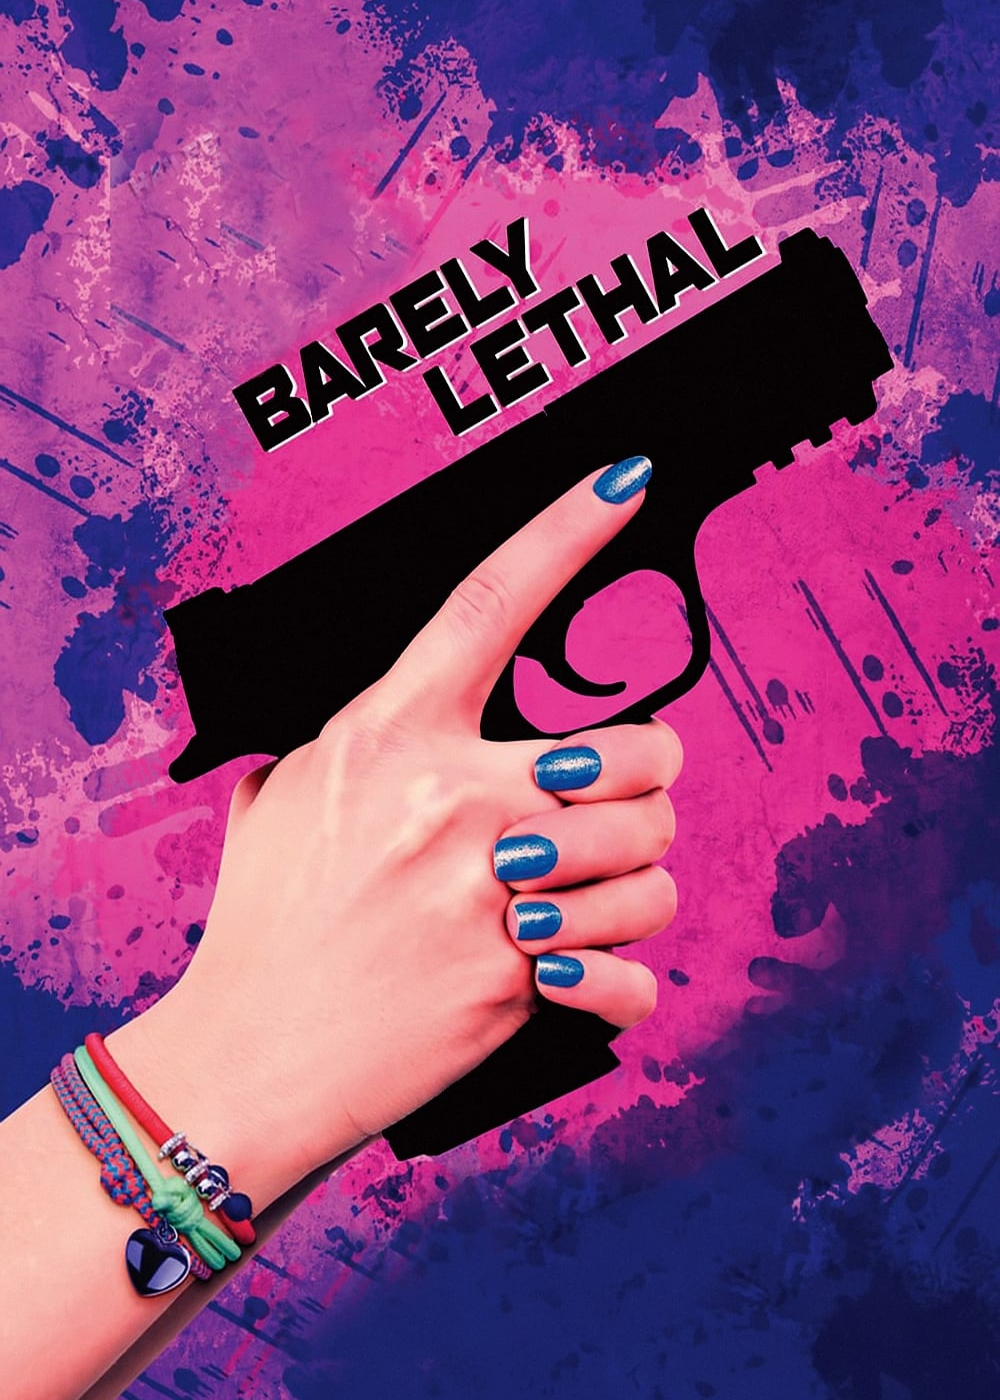 Poster Phim Đặc Vụ Ku-te (Barely Lethal)